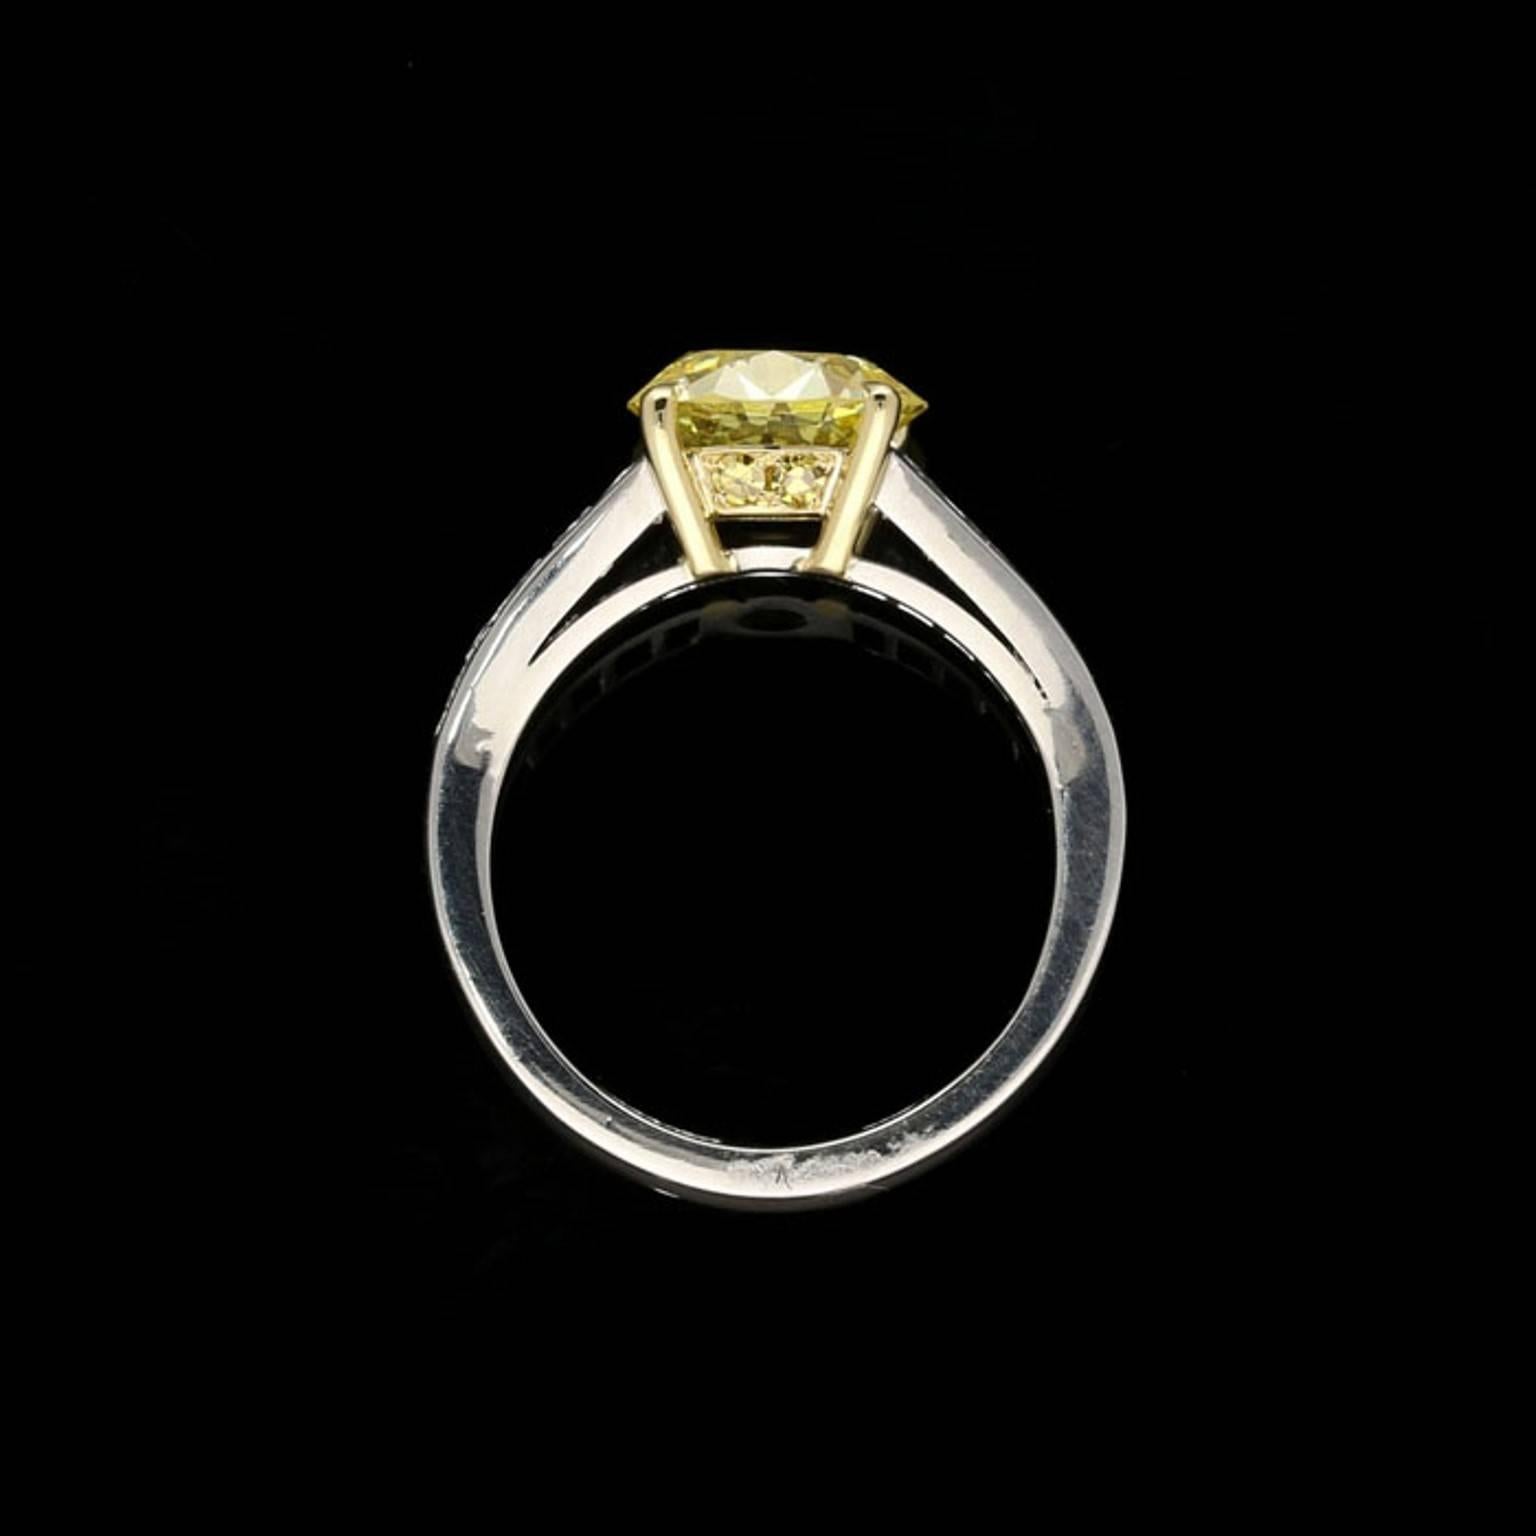 Contemporary Hancocks 2.41 Carat Fancy Intense Yellow Diamond Ring & French-Cut Shoulders